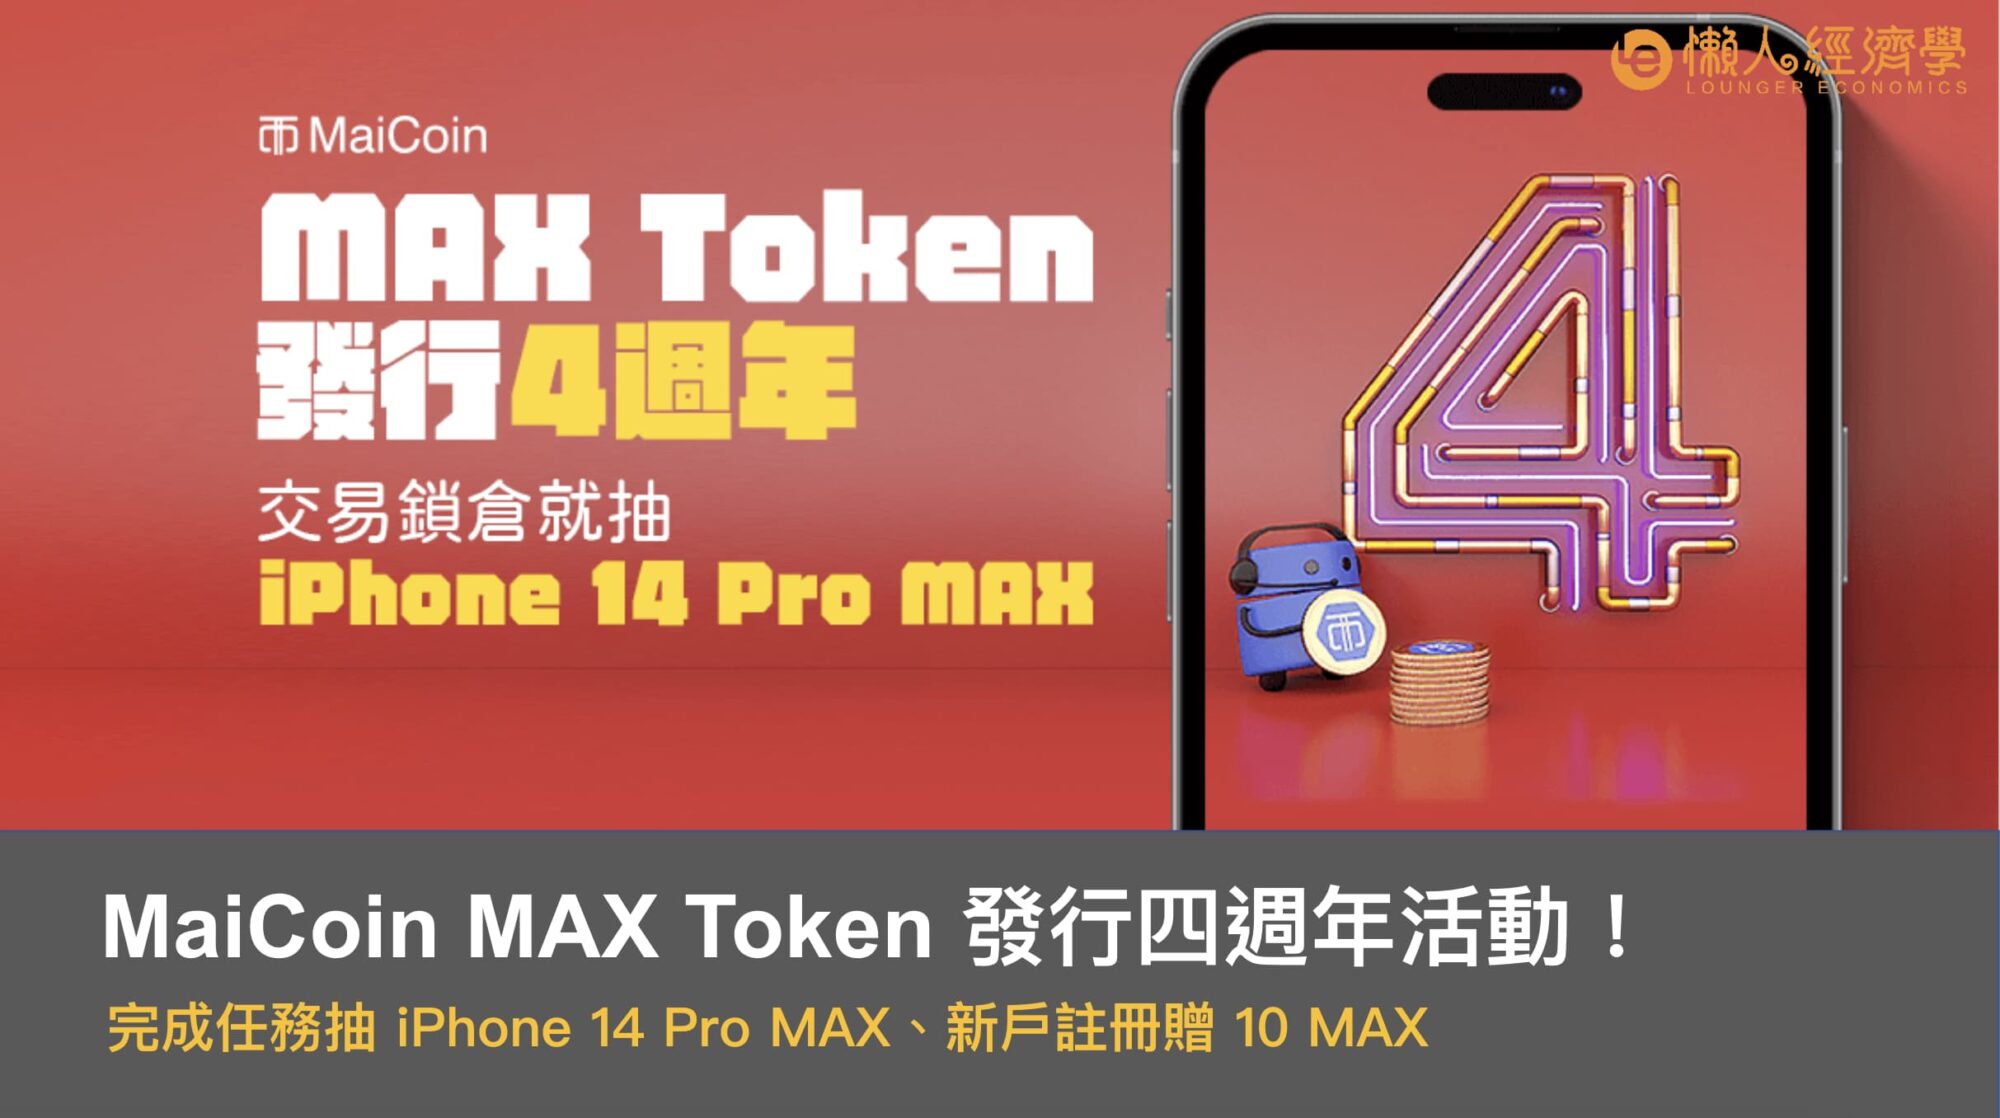 MaiCoin MAX Token 發行四週年活動，完成任務抽 iPhone 14 Pro MAX 與瓜分 10 萬台幣獎池！